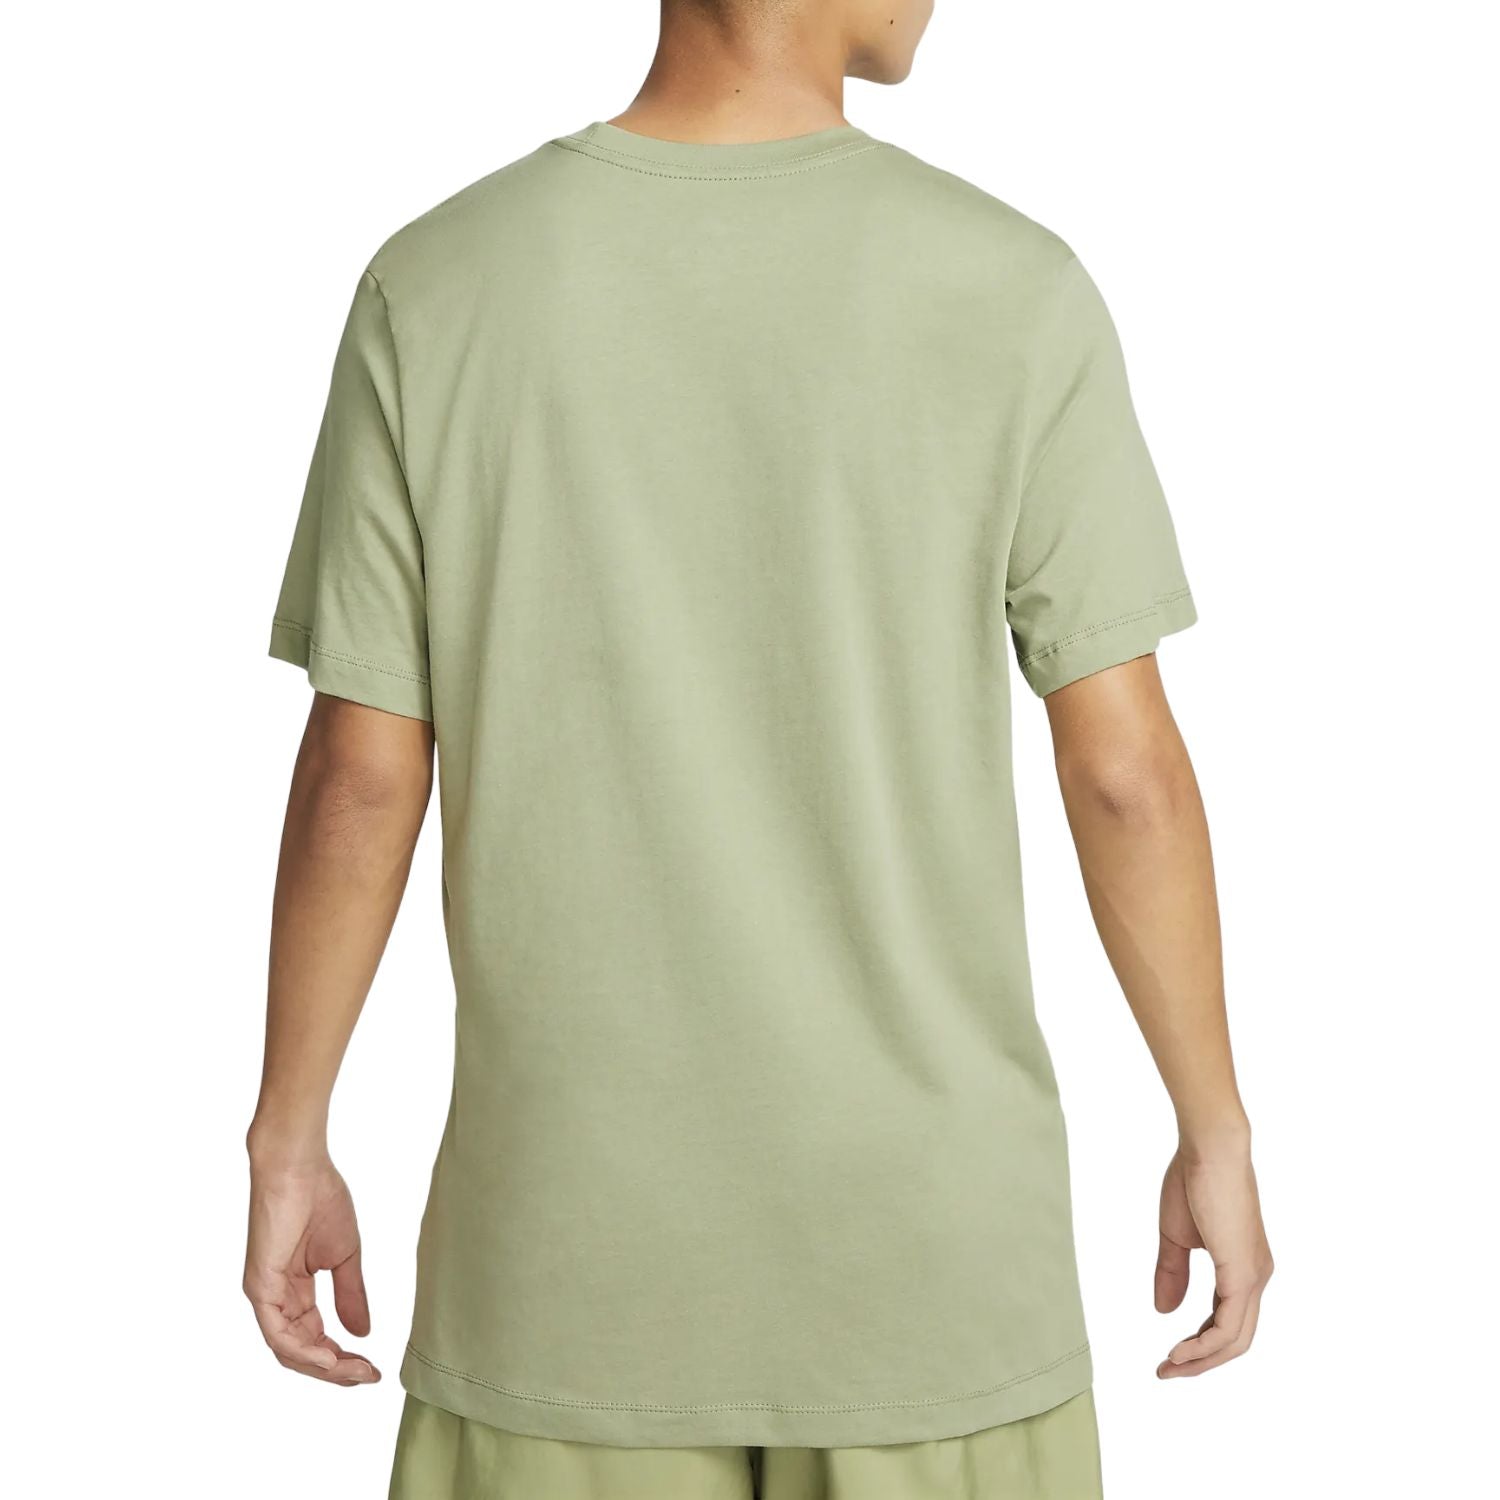 Nike Sportswear T-shirt Mens Style : Dz2821